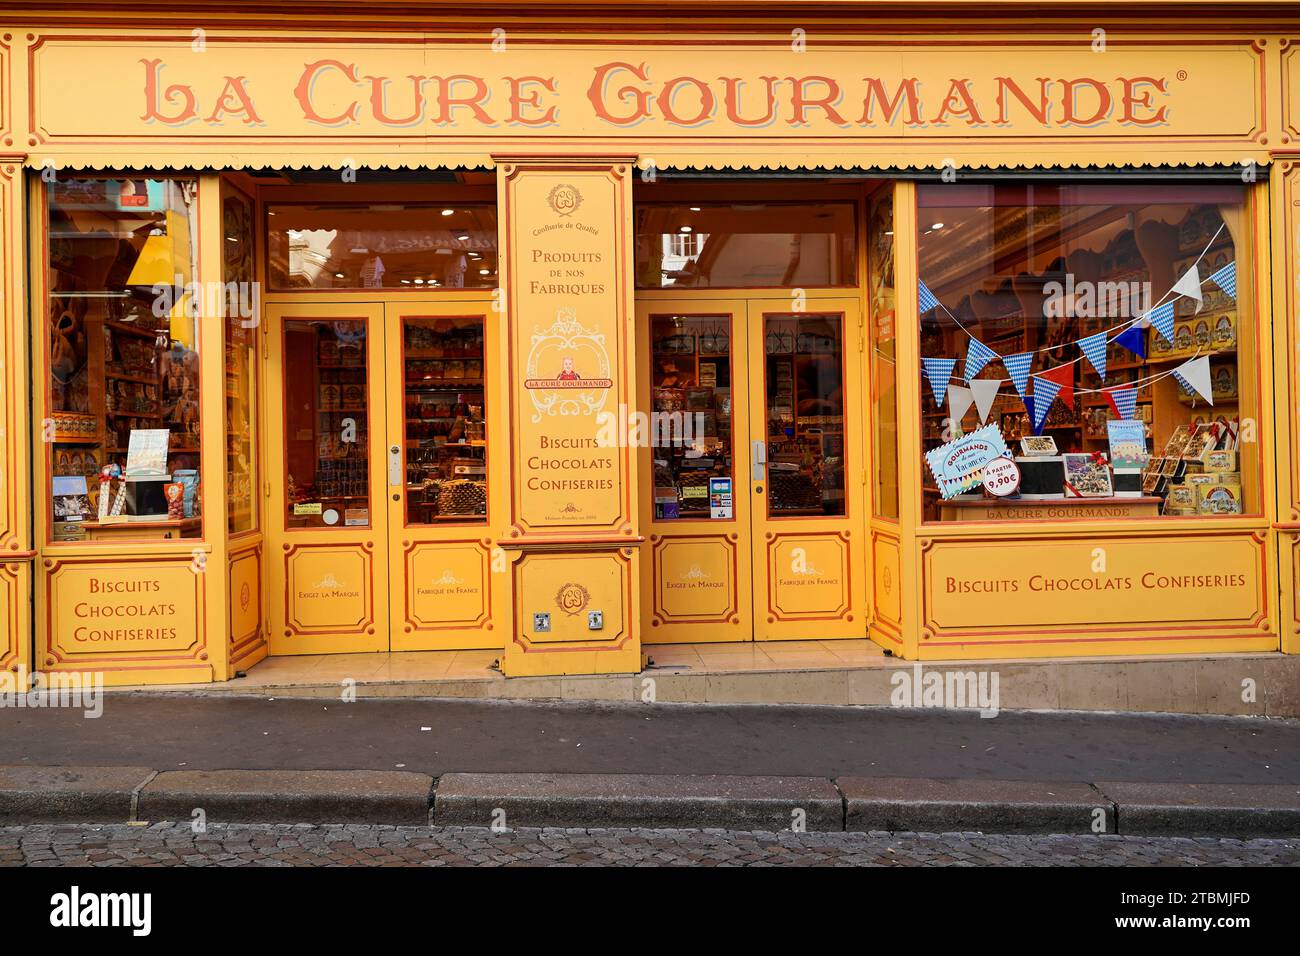 Cafe Restaurant, Montmartre, Paris, Frankreich Stockfoto